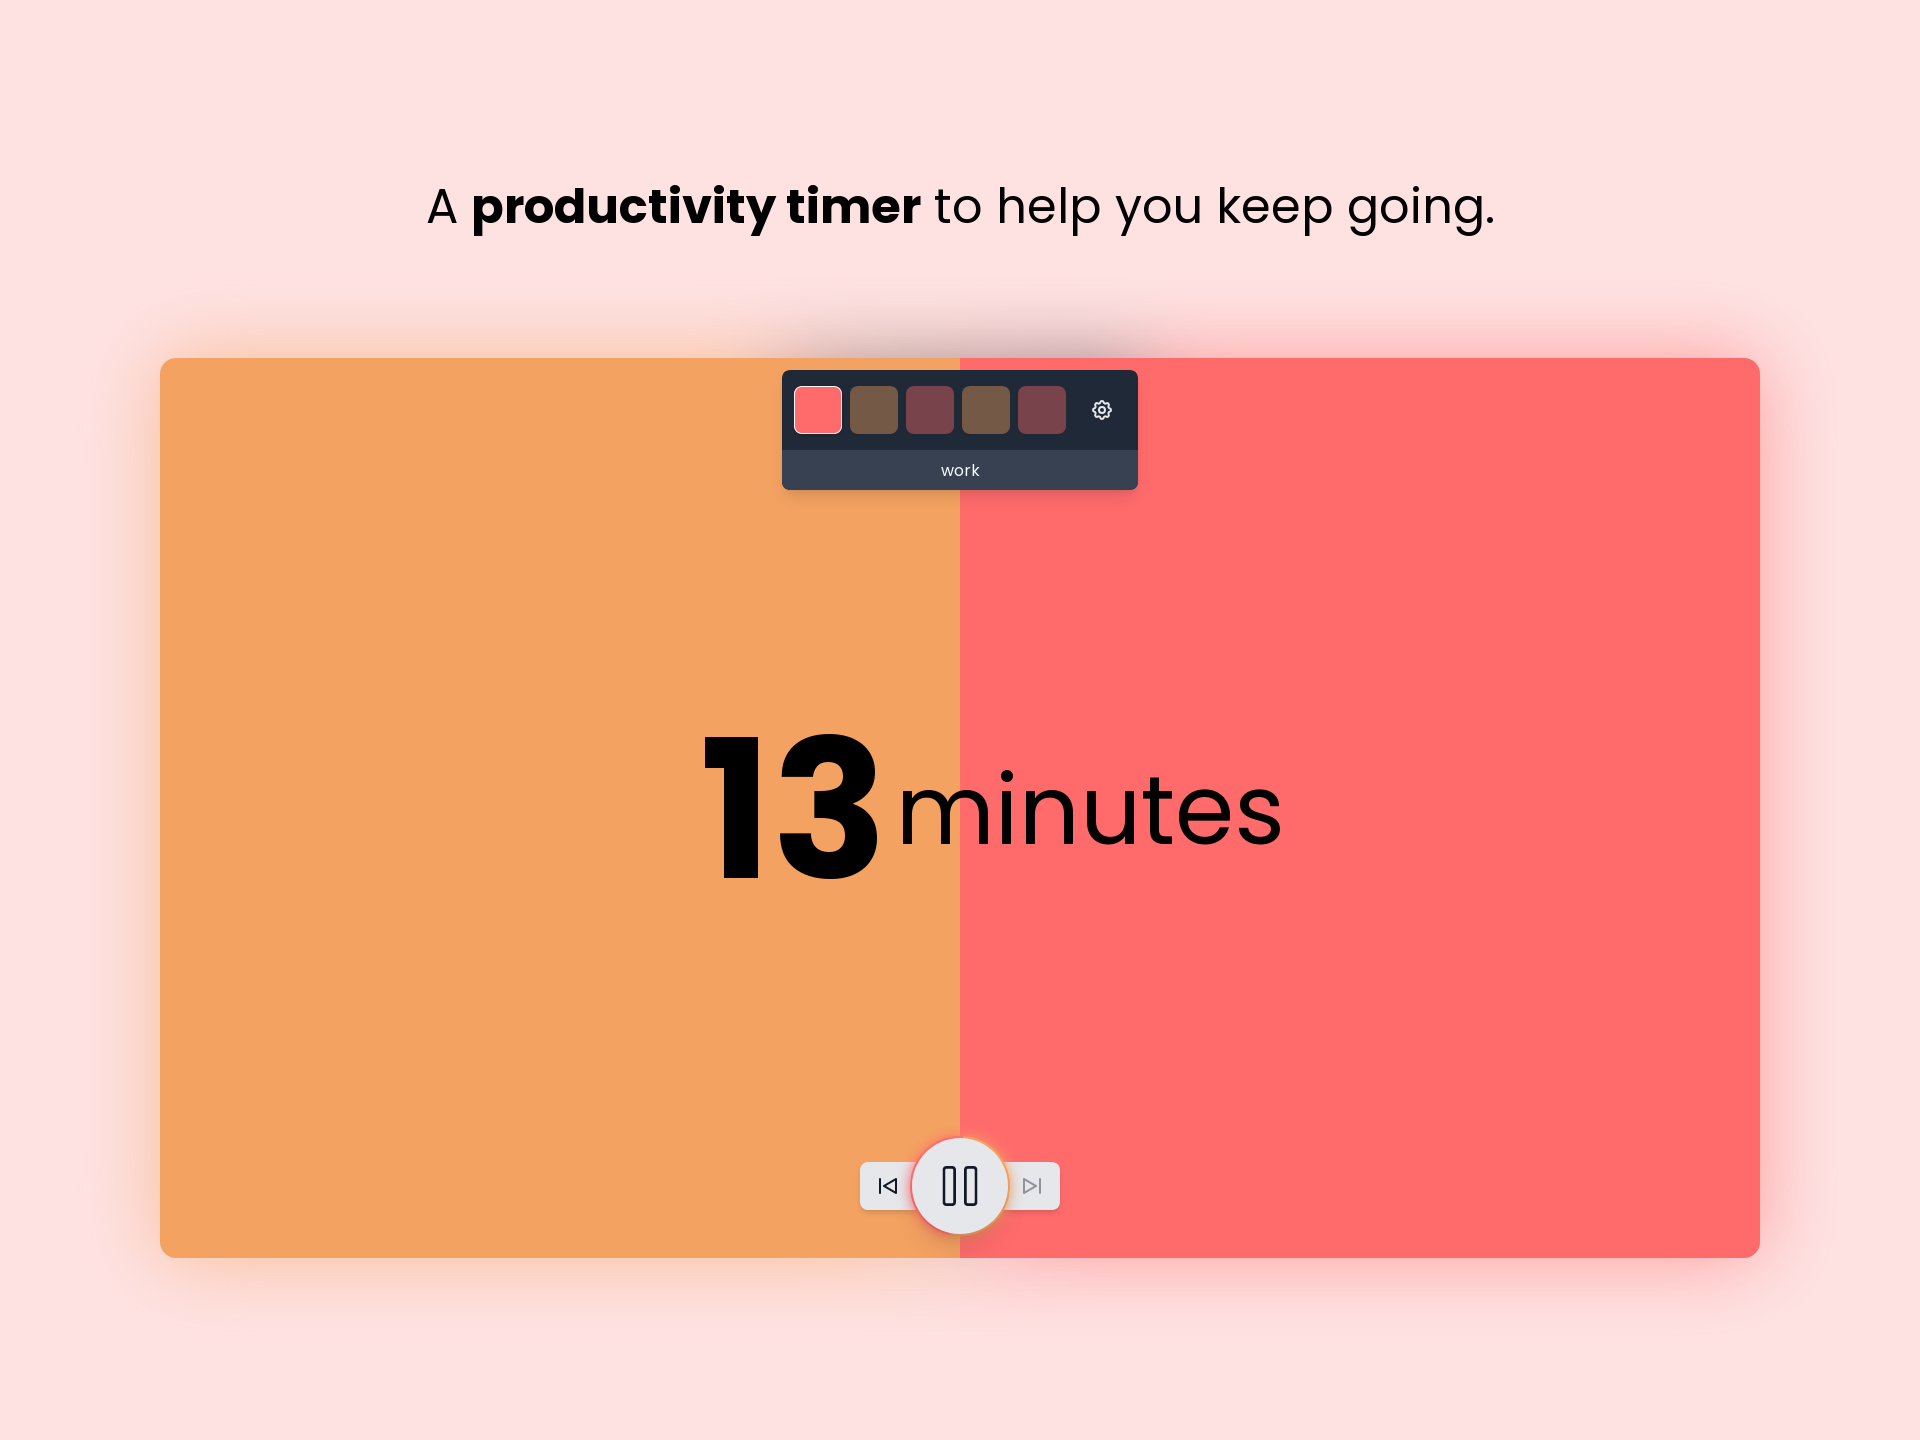 AnotherPomodoro: Modern productivity timer